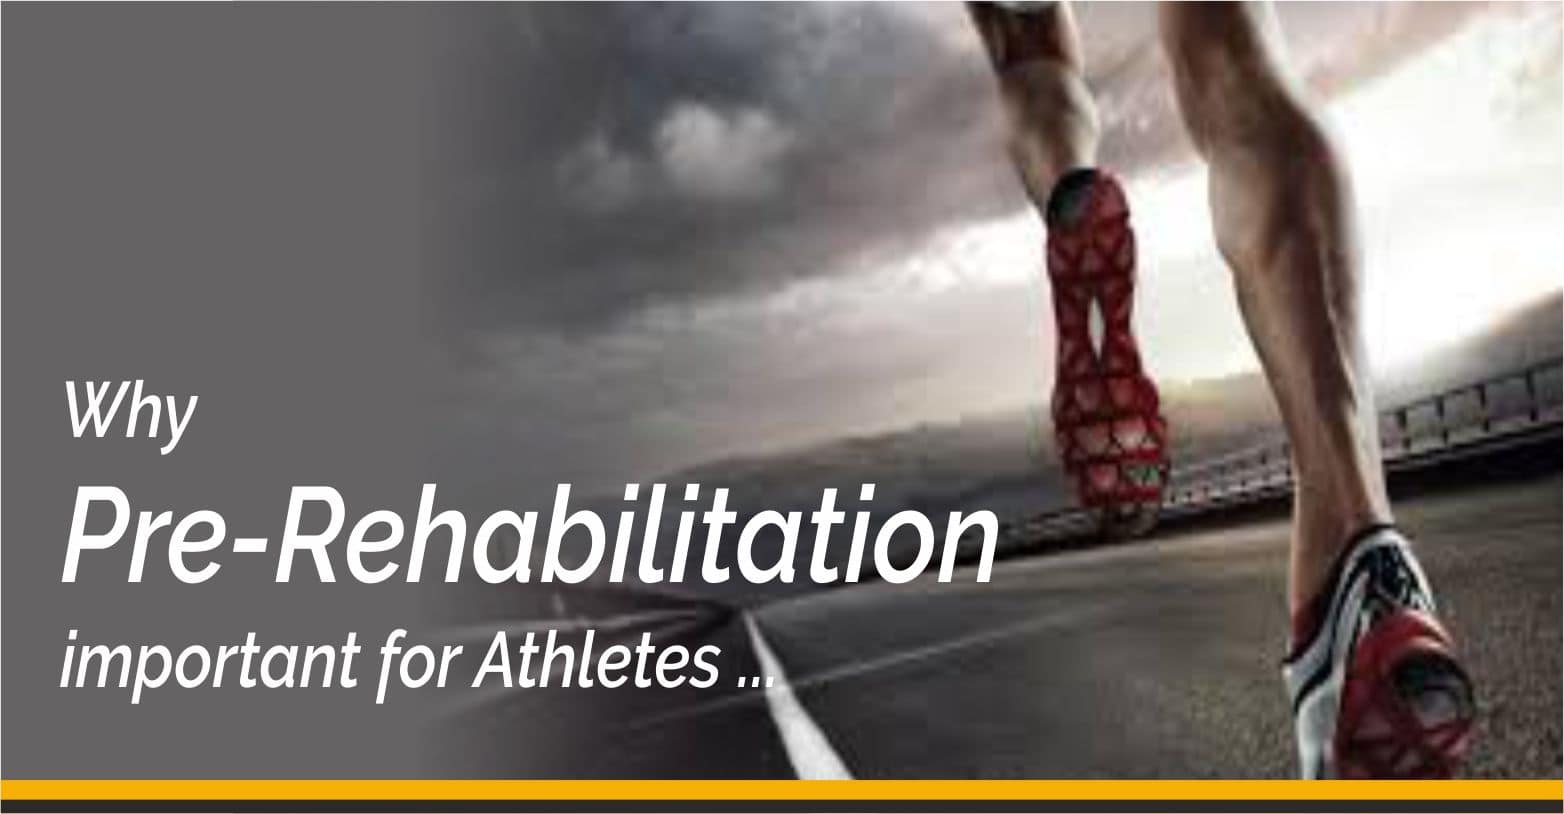 sport rehabilitation essay